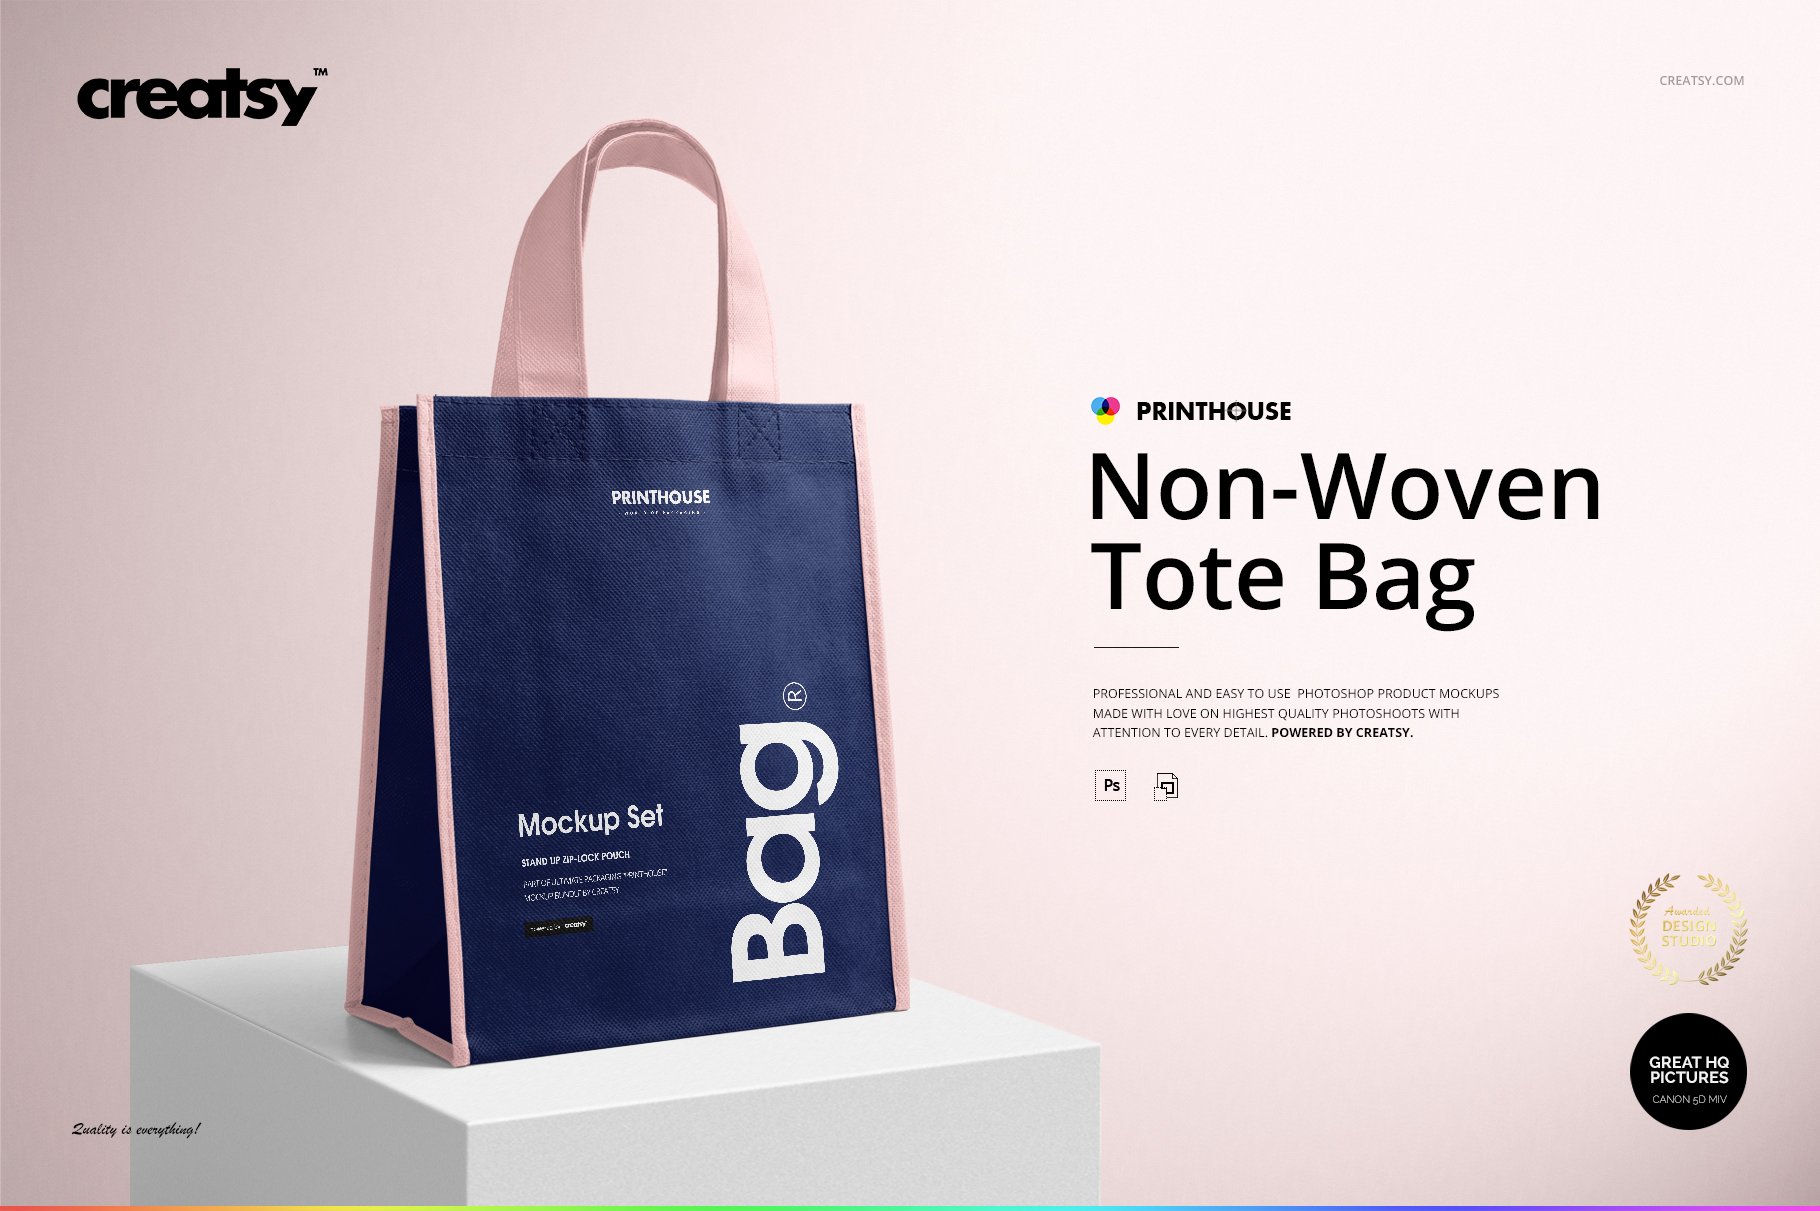 Non-Woven Tote Bag Mockup Set cover image.